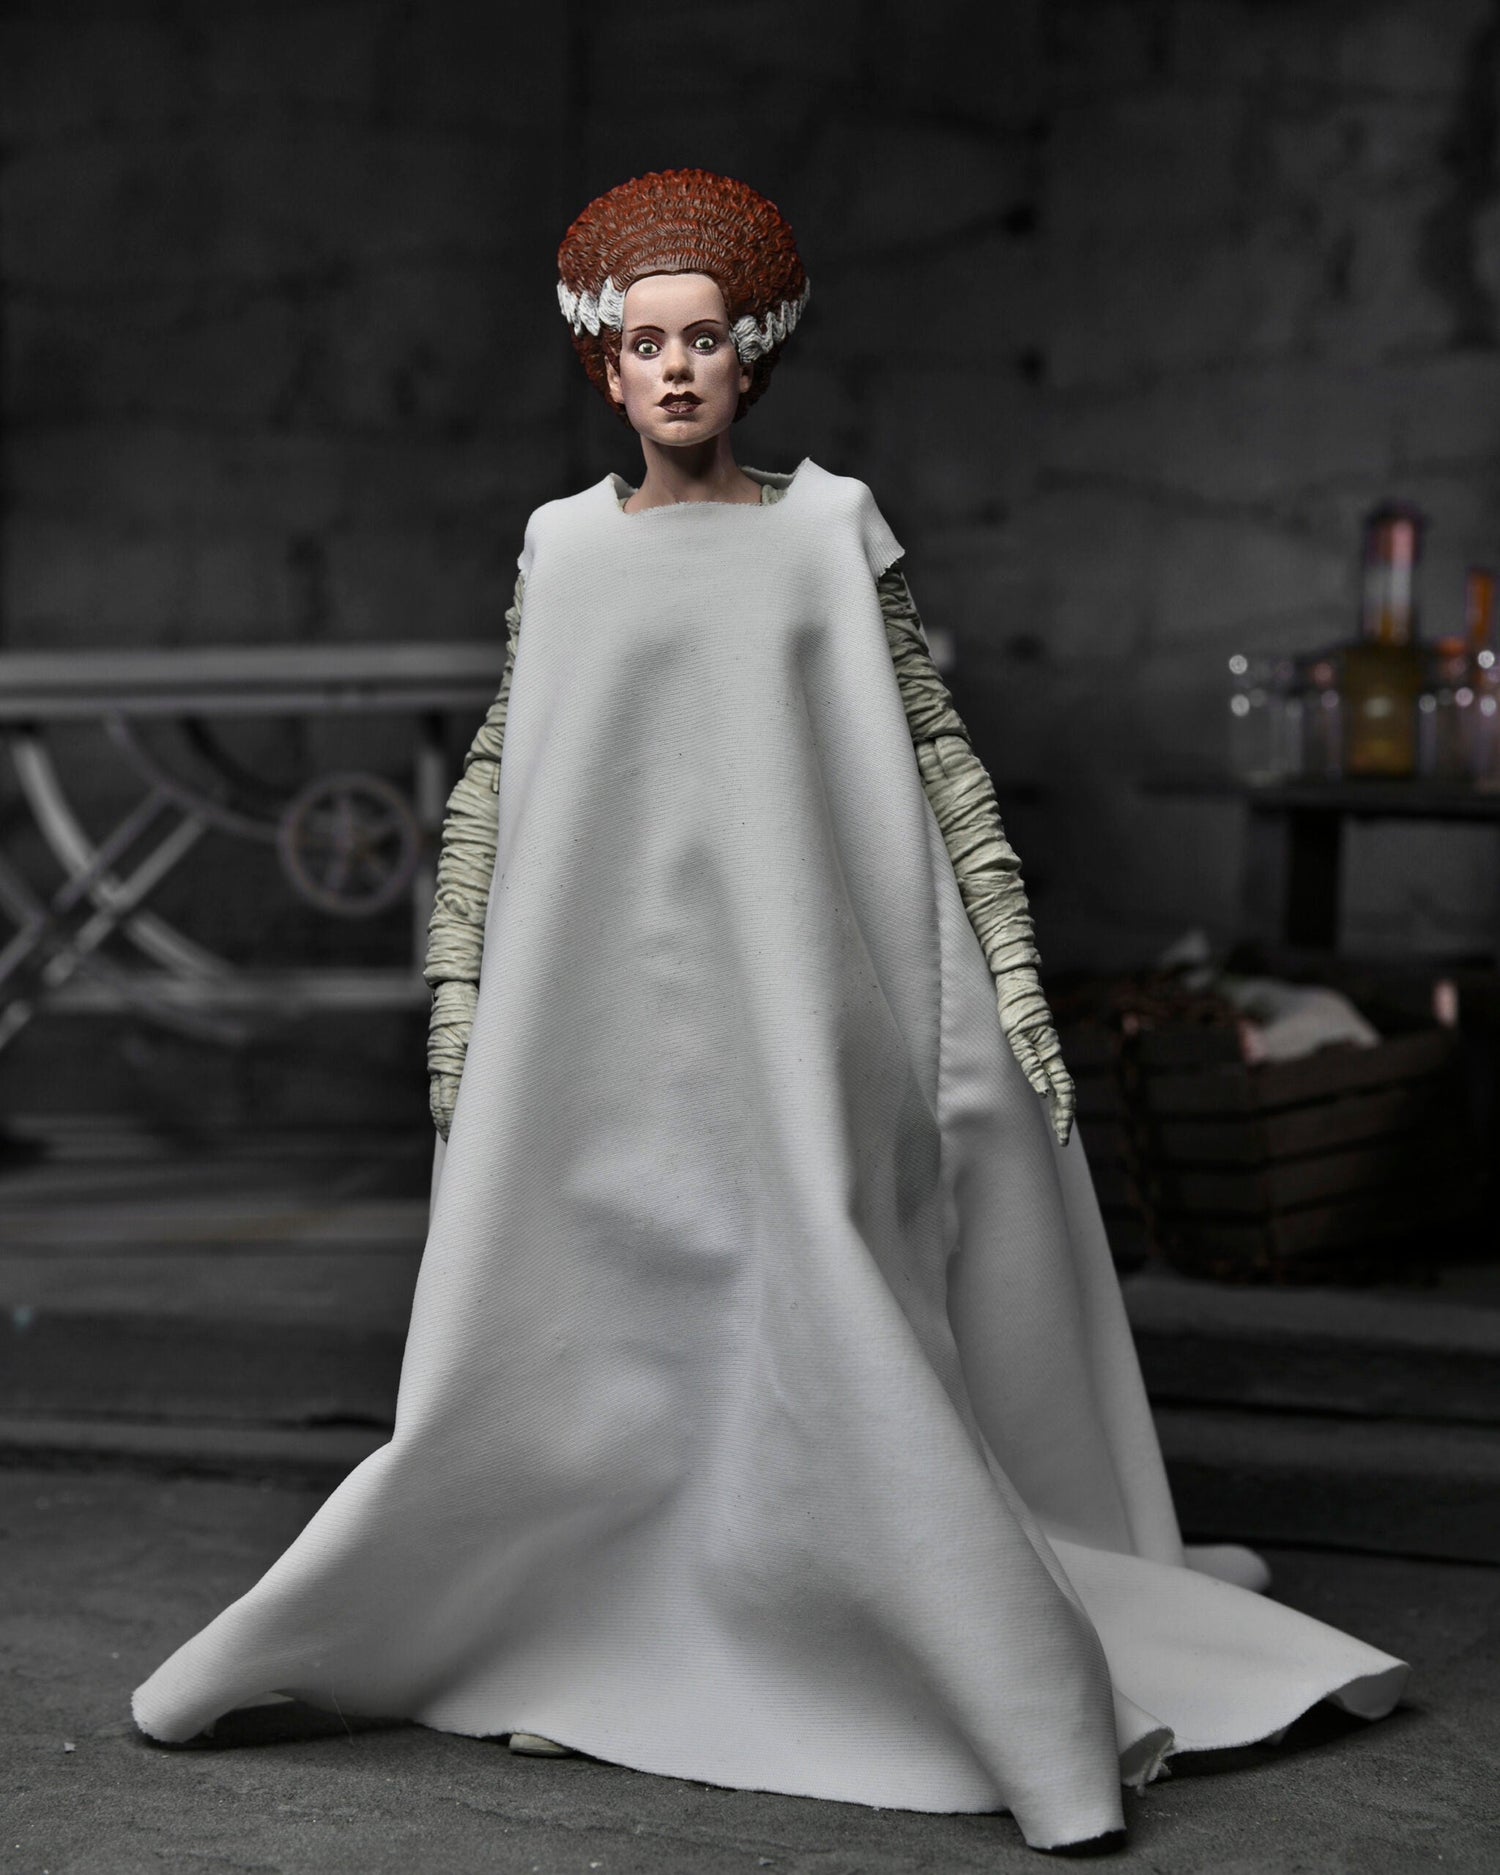 NECA Universal Monsters Ultimate Bride of Frankenstein Color NECA